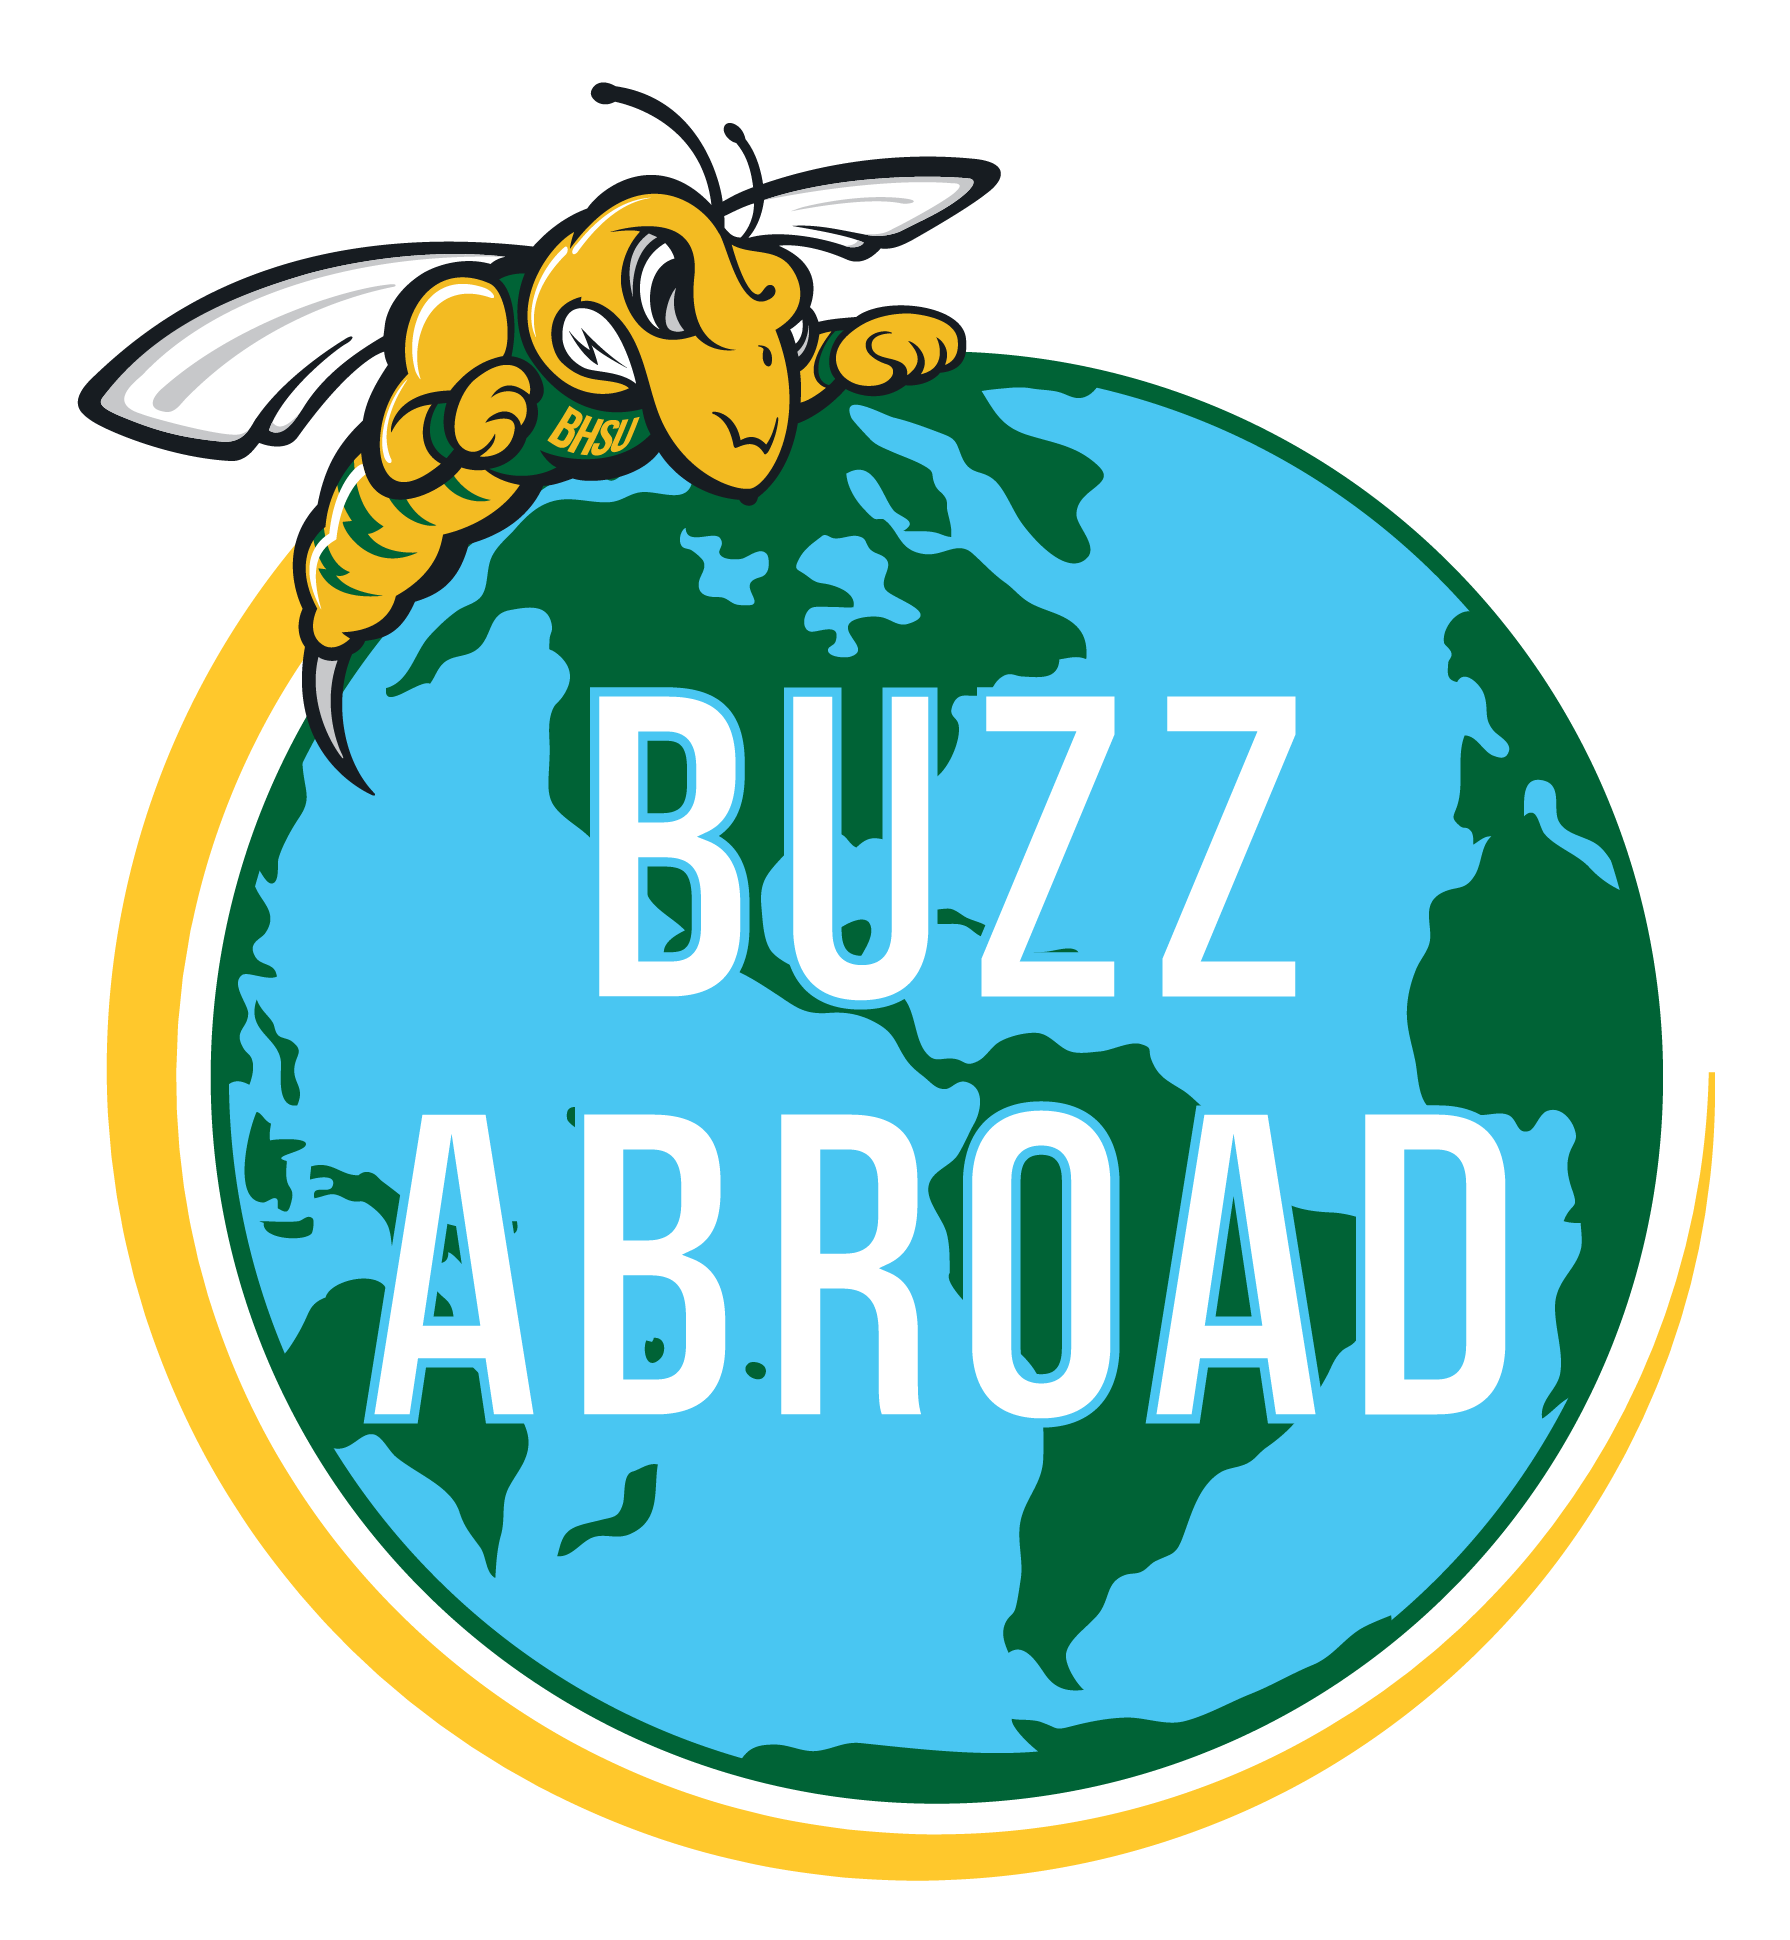 BuzzAbroad Logo featuring Sting circling the globe